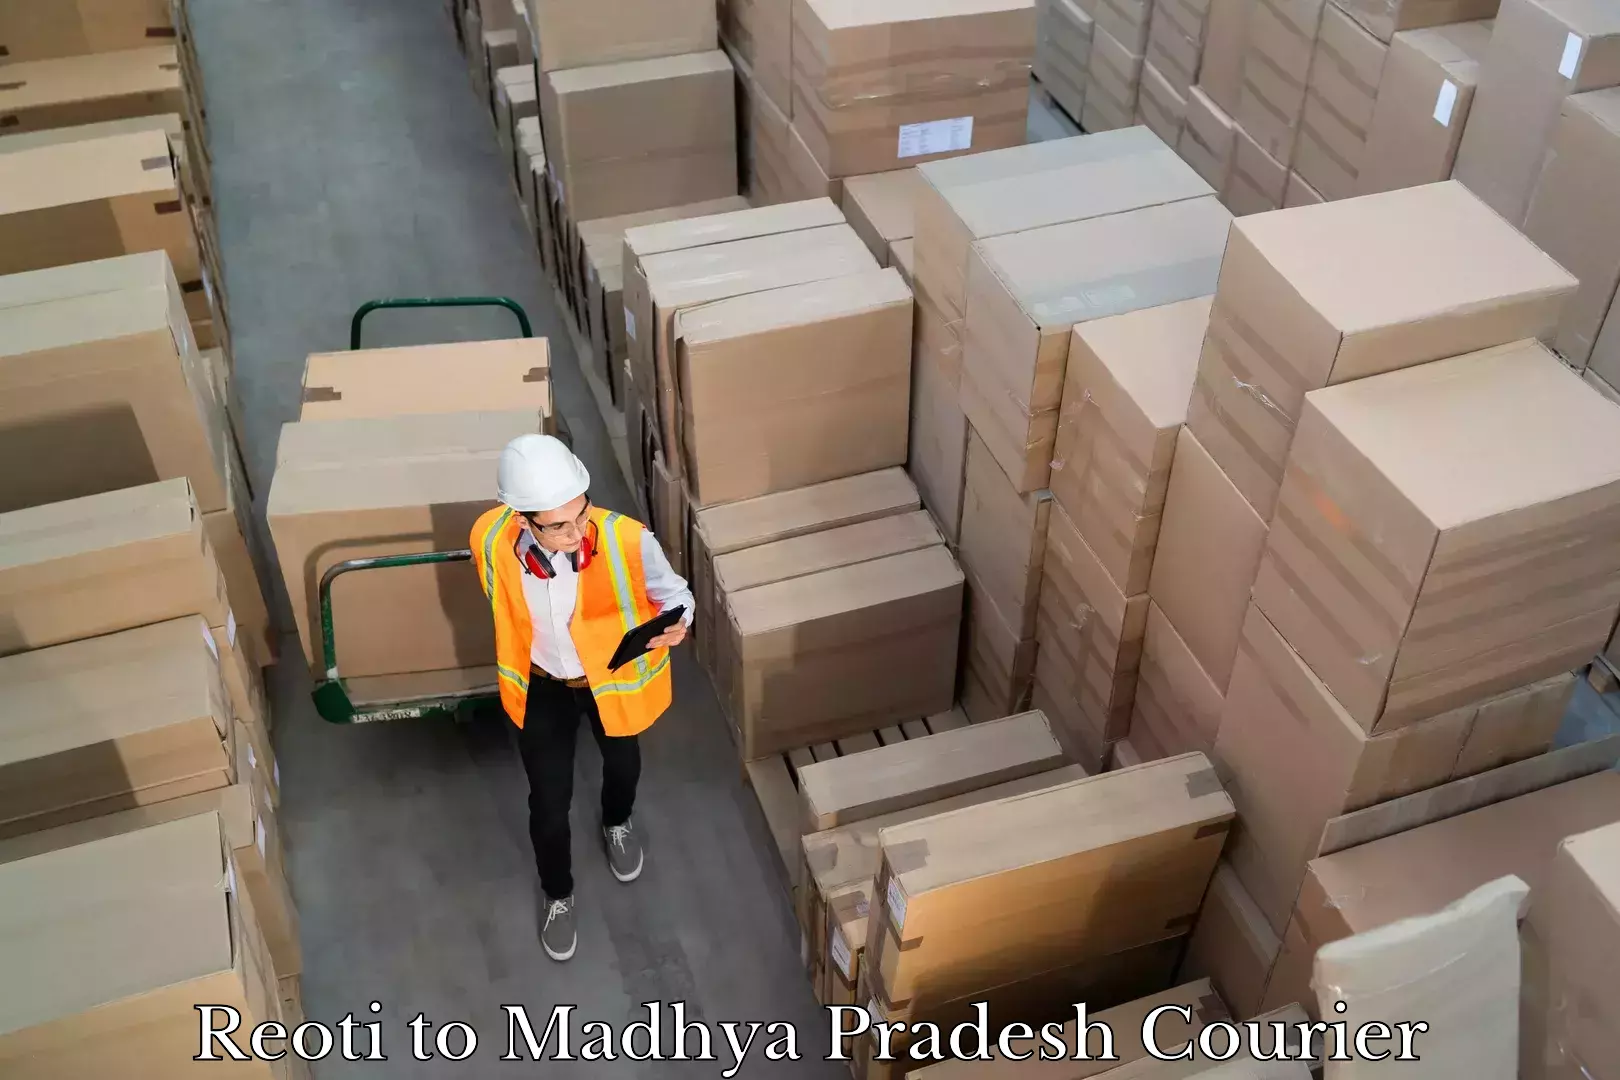 Express logistics service Reoti to Madhya Pradesh